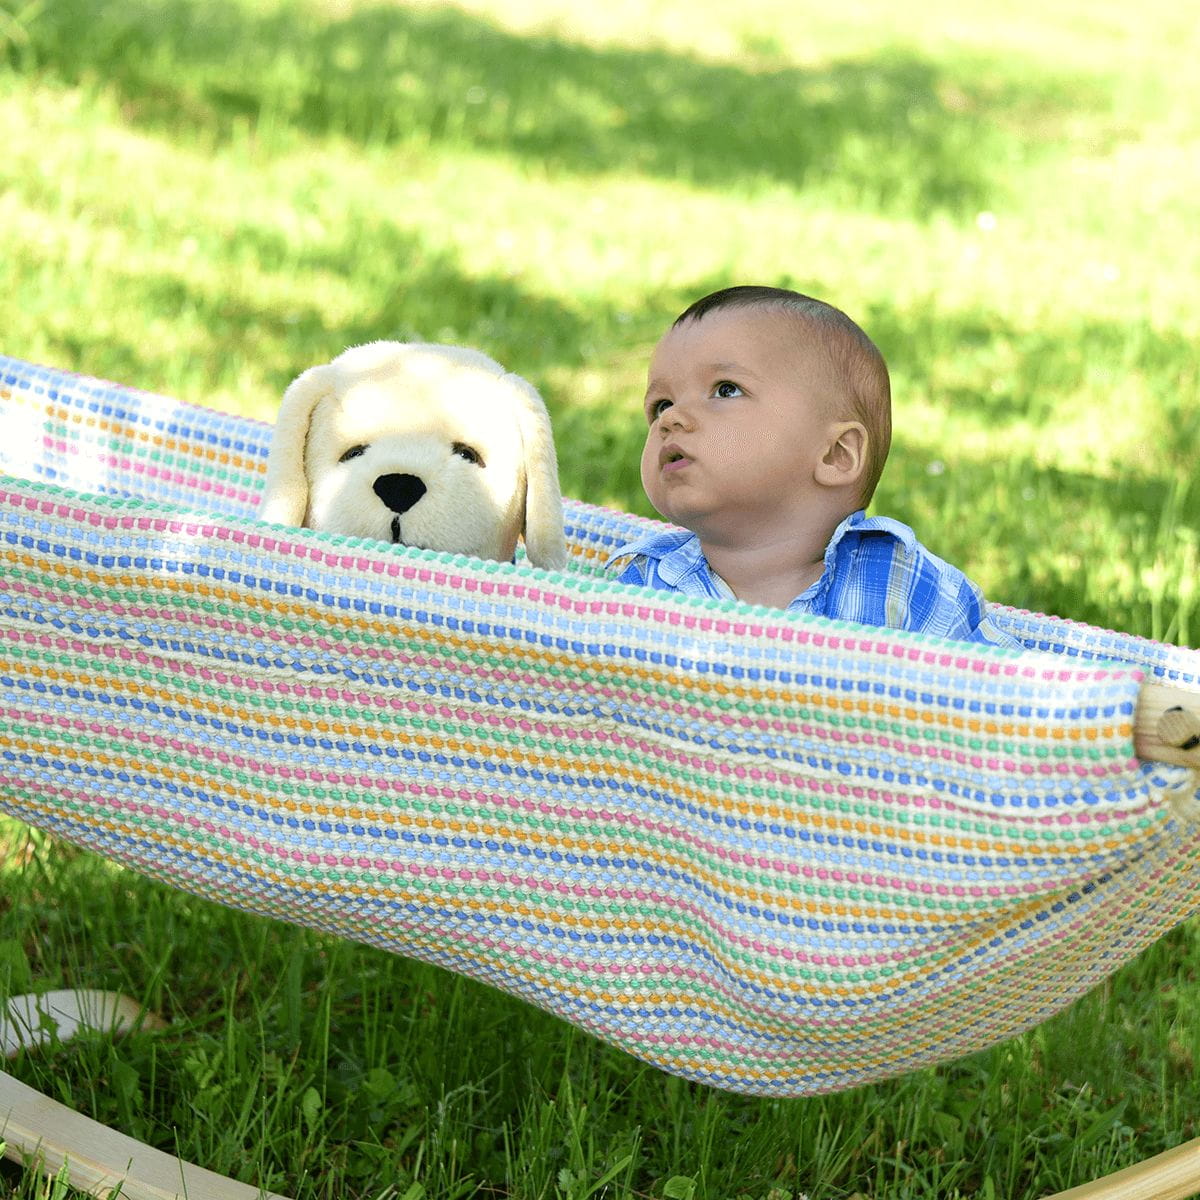 Children's hammocks